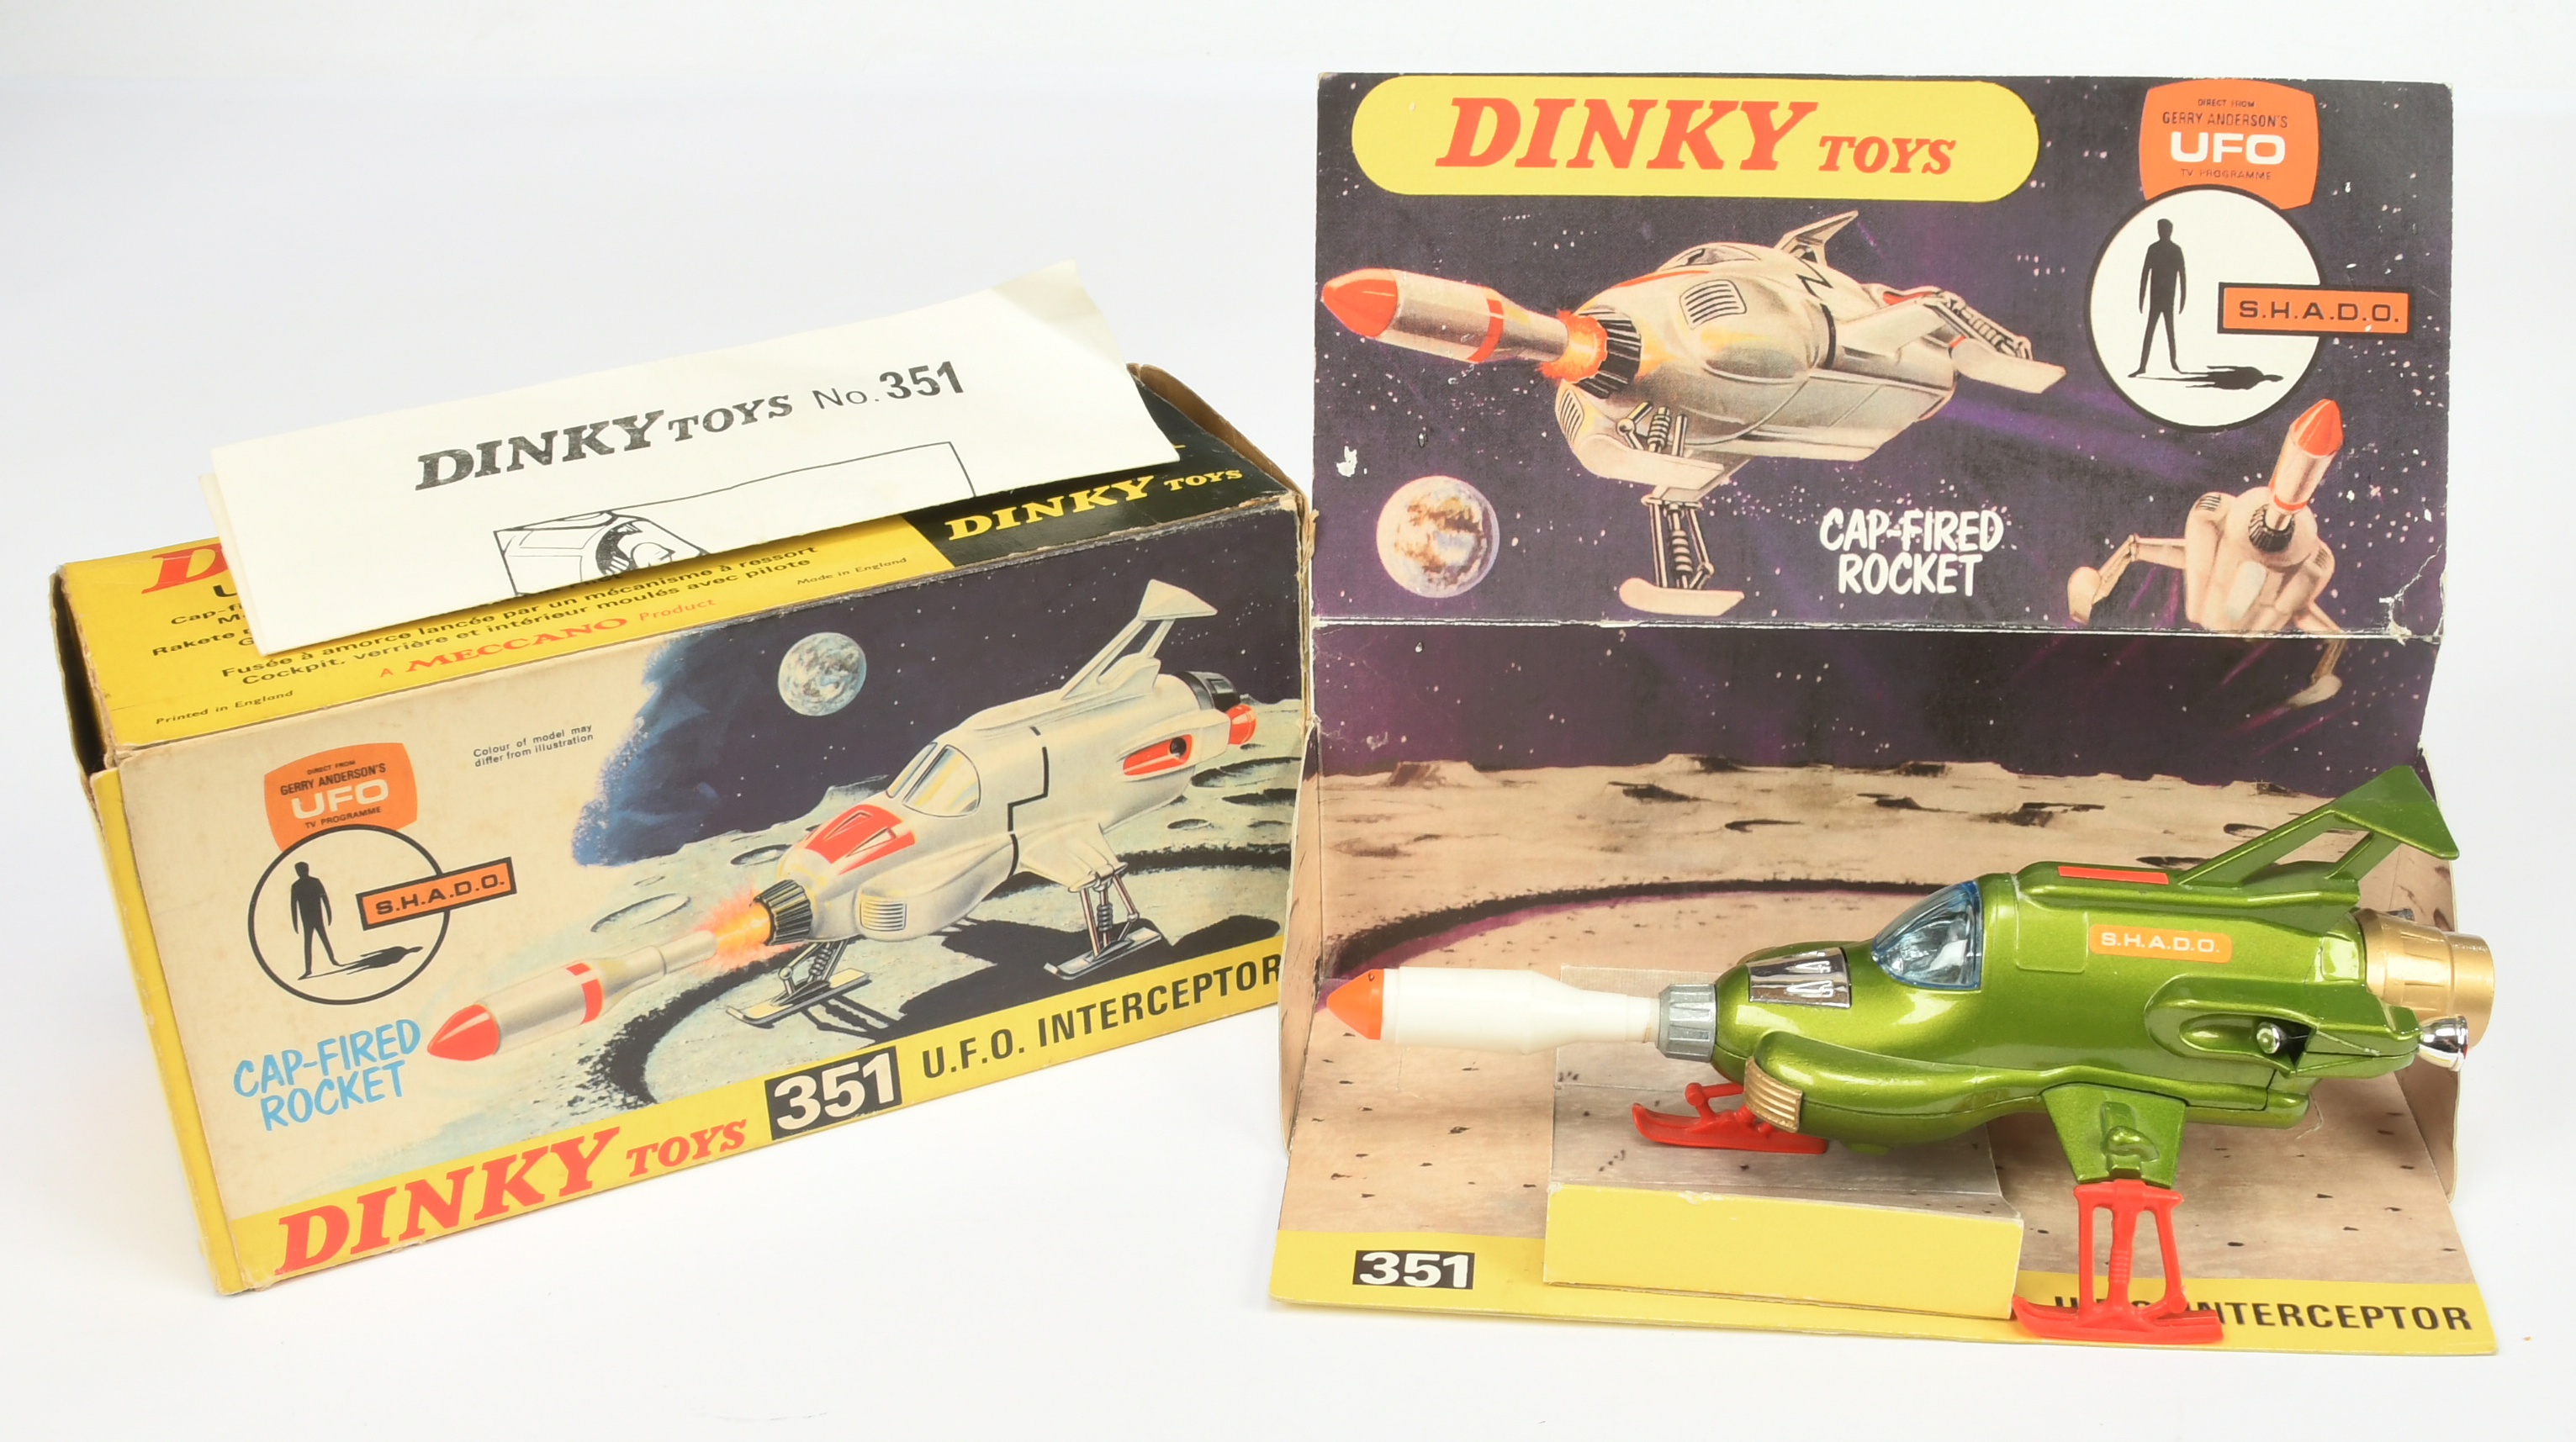 Dinky Toys 351 "UFO" Shado Interceptor - Green, chrome interior with blue tinted window, red legs...